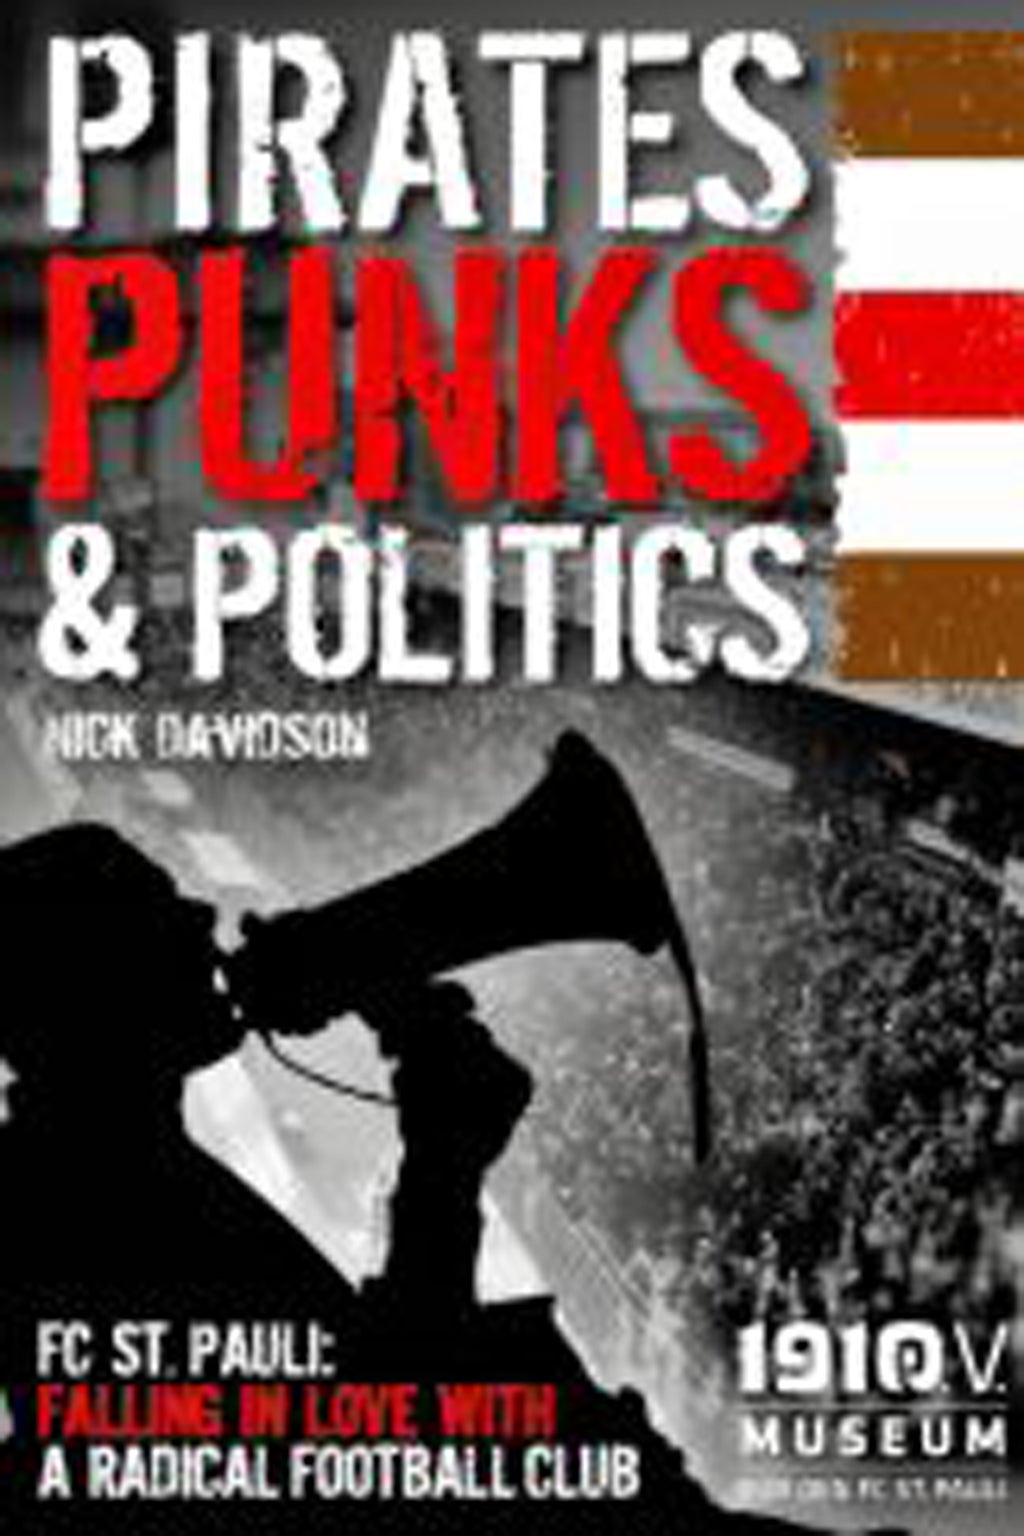 Pirates, Punks & Politics by Nick Davidson